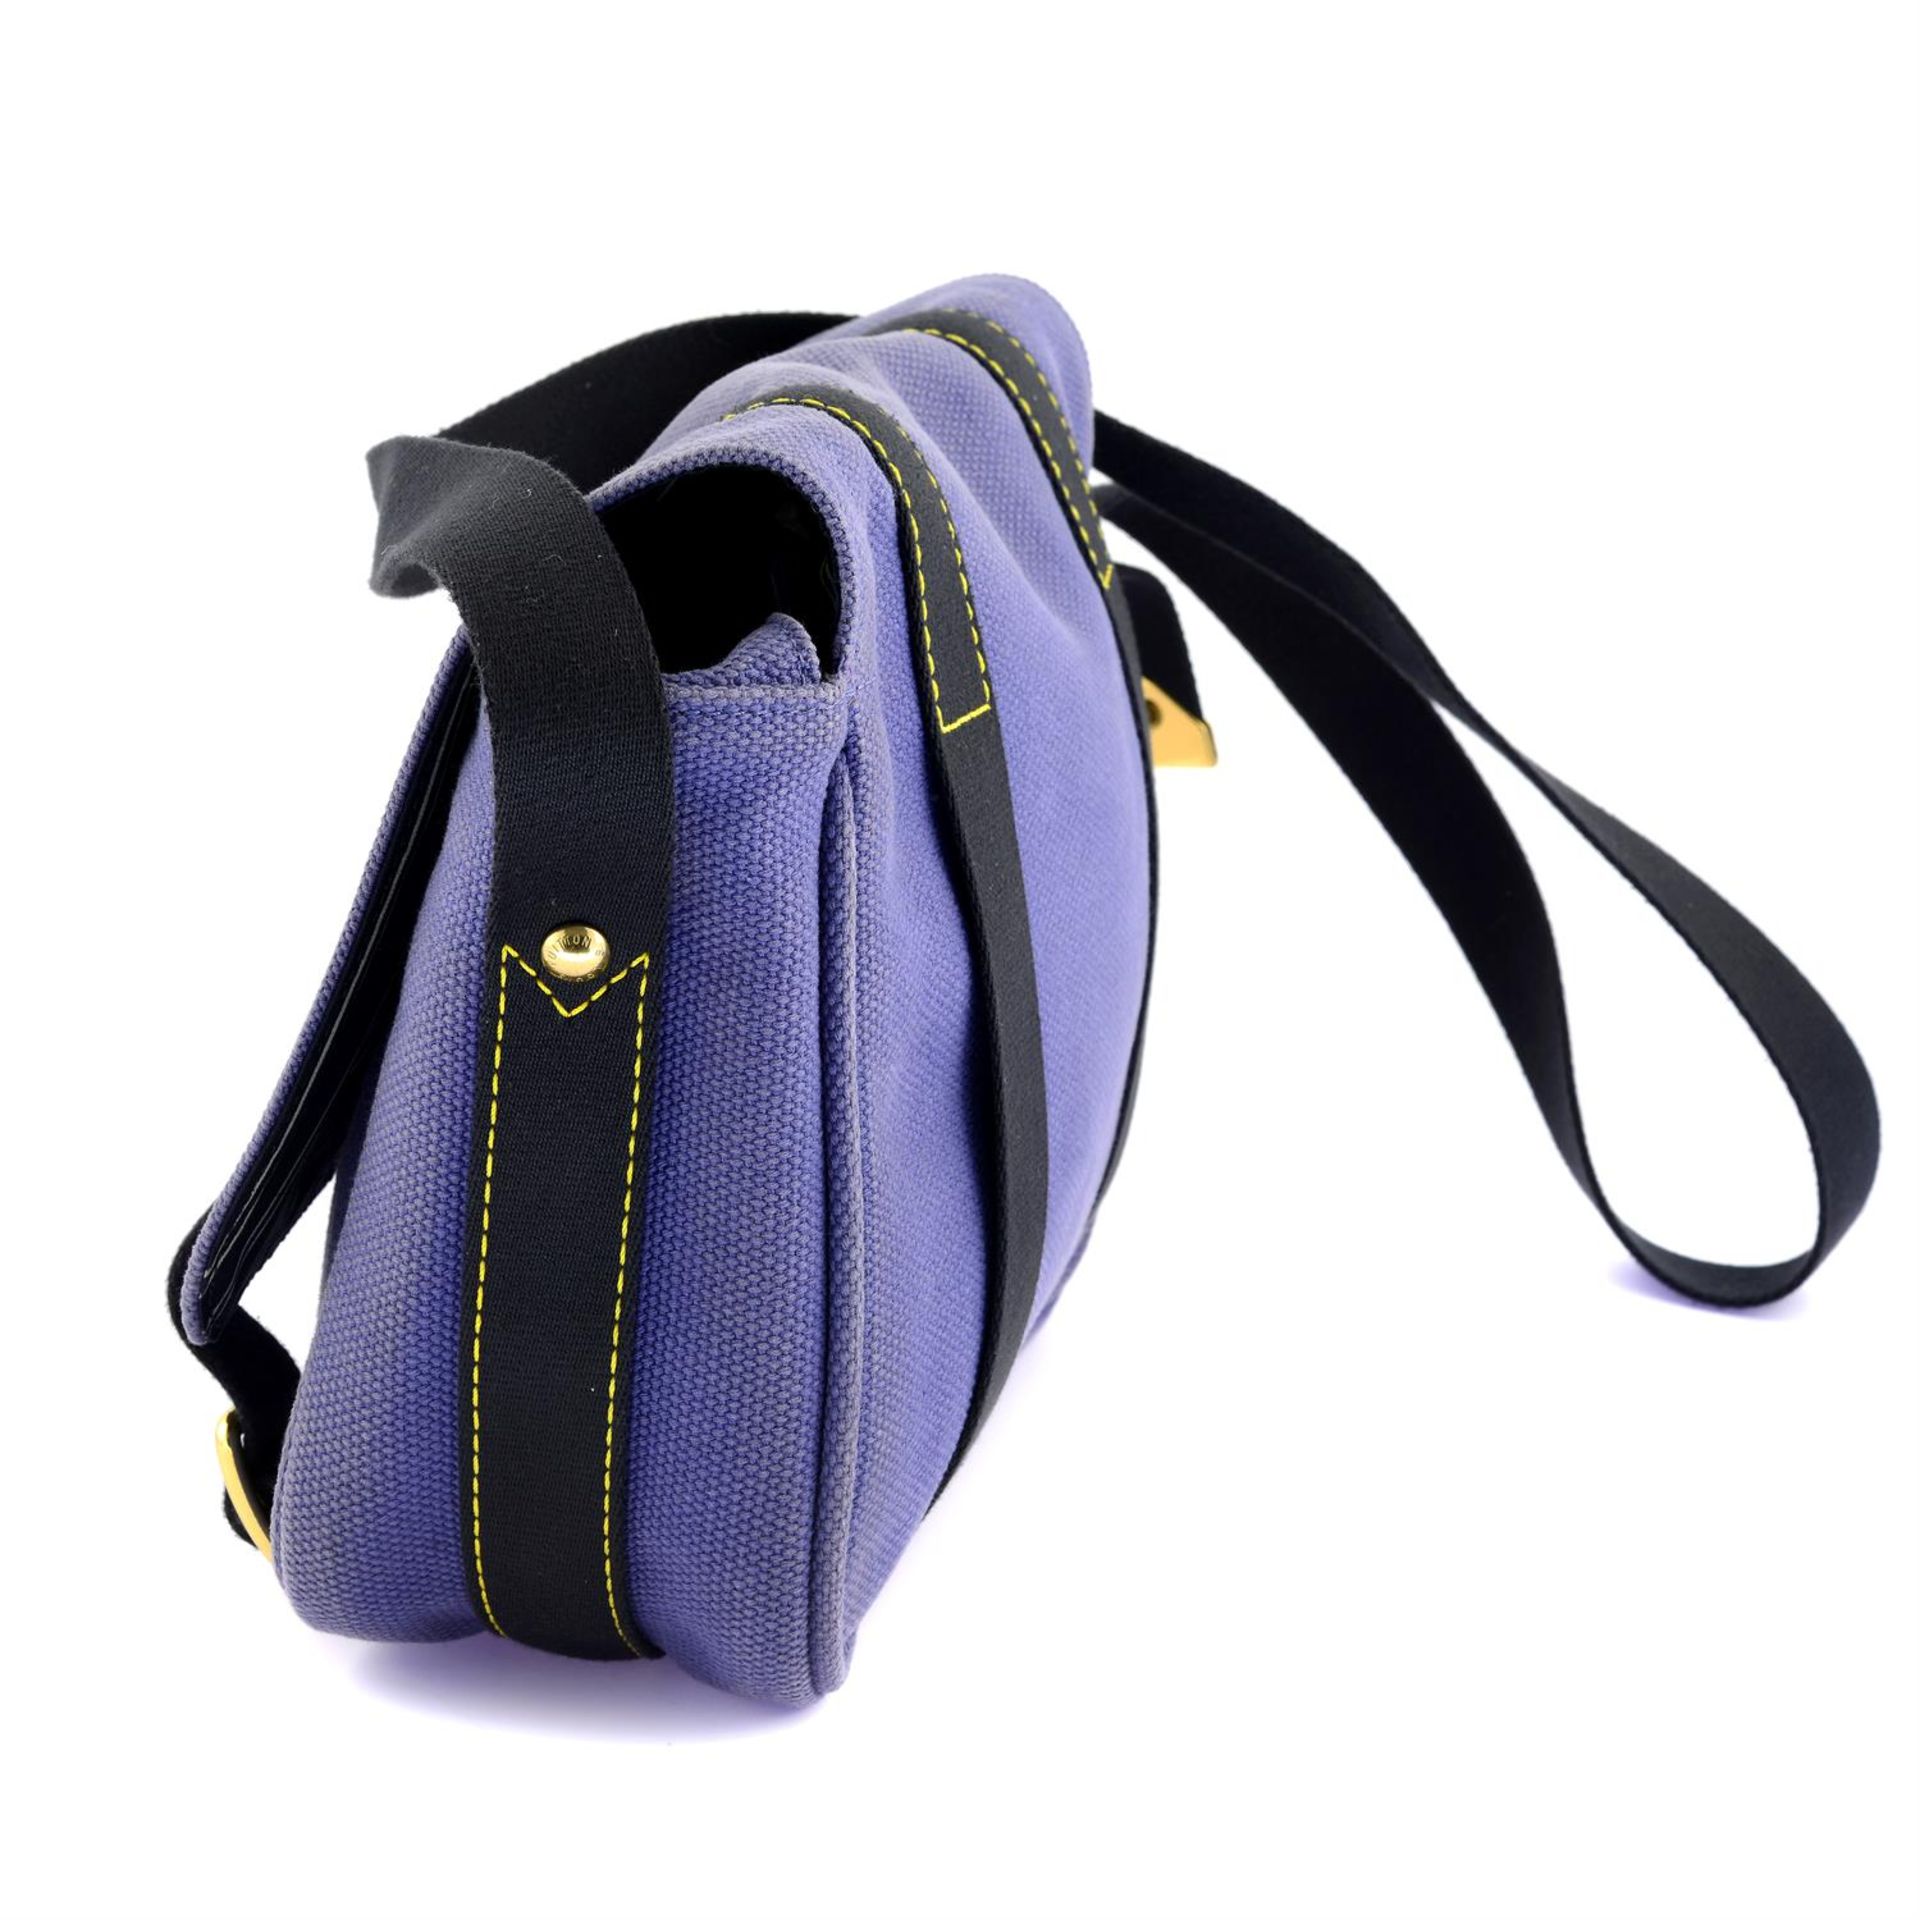 LOUIS VUITTON - a purple Antigua Besace PM bag. - Image 3 of 4